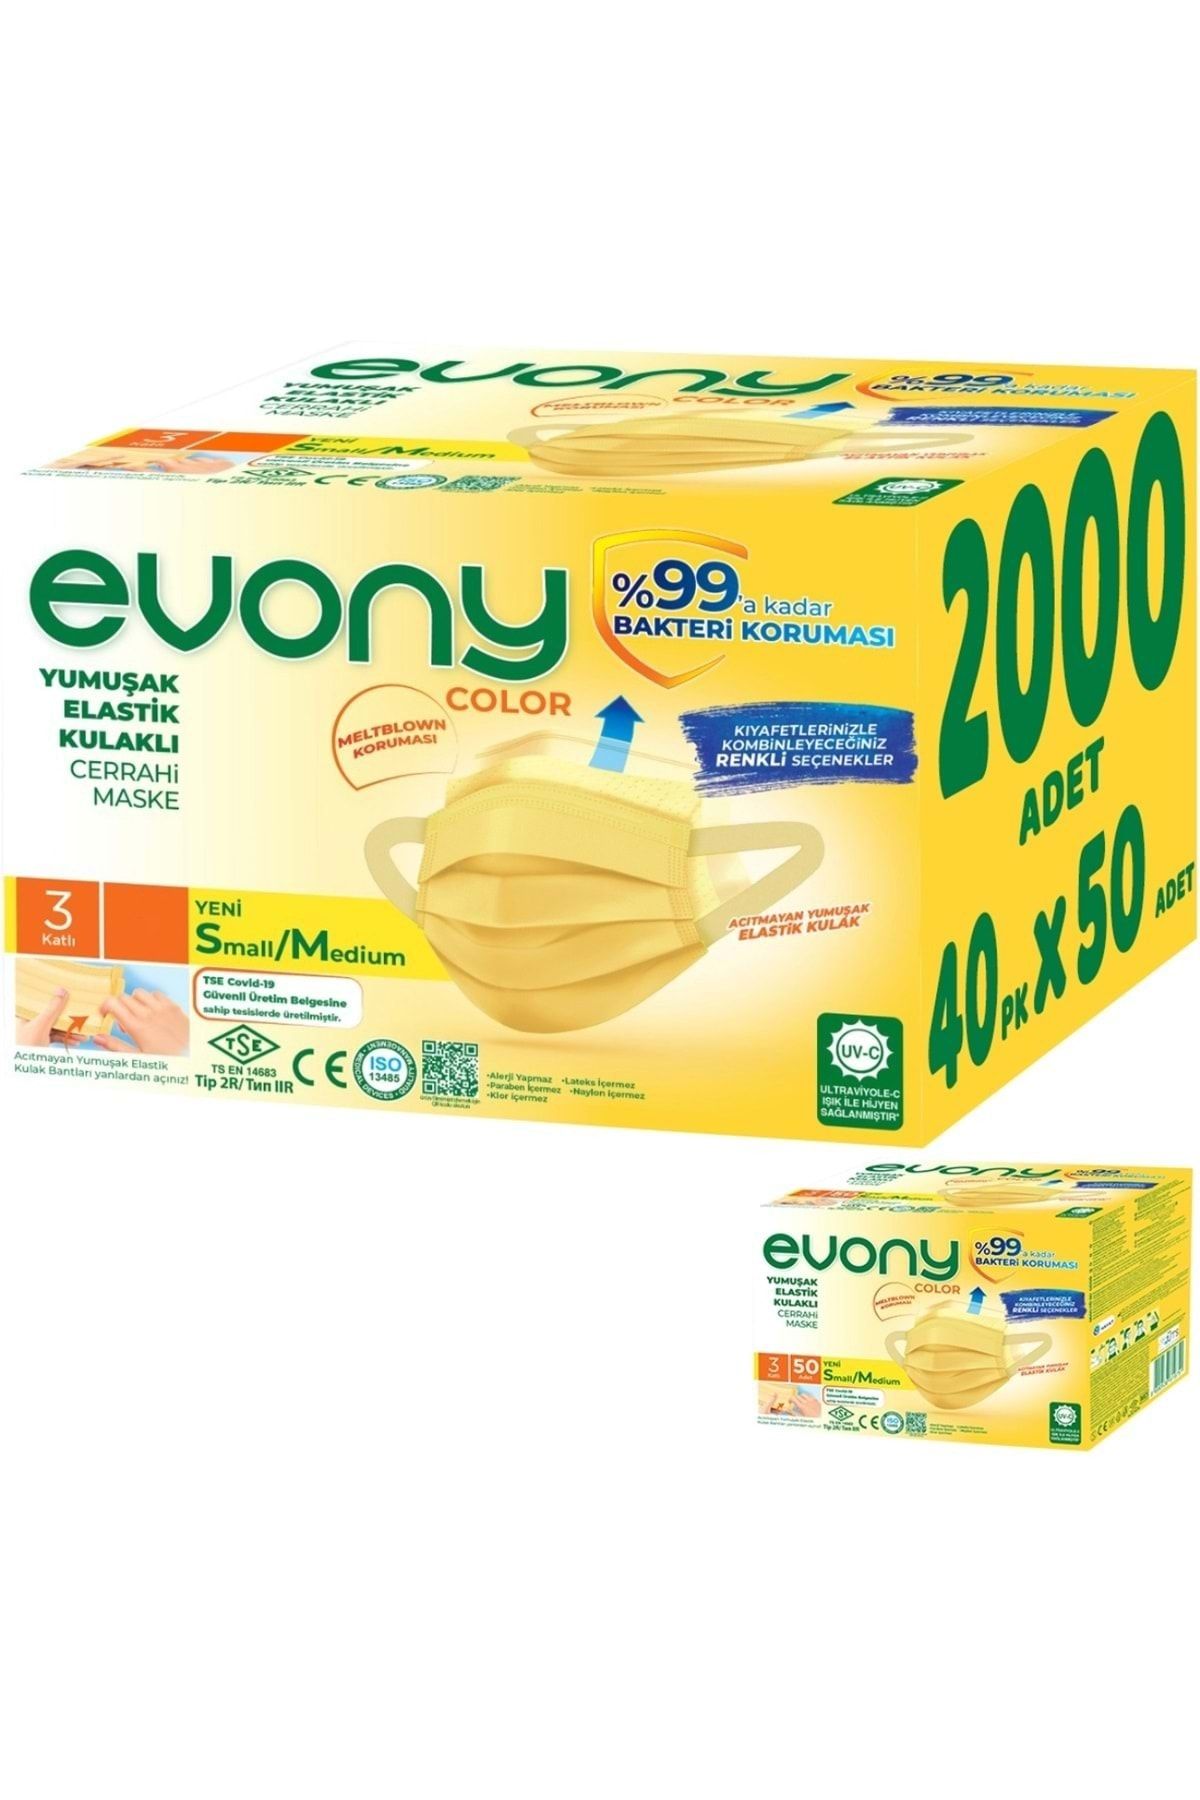 Evony 3 Katlı Filtreli Burun Telli Cerrahi Maske 2000 Li Set Small/medium Sarı 160*90mm (40pk*50)